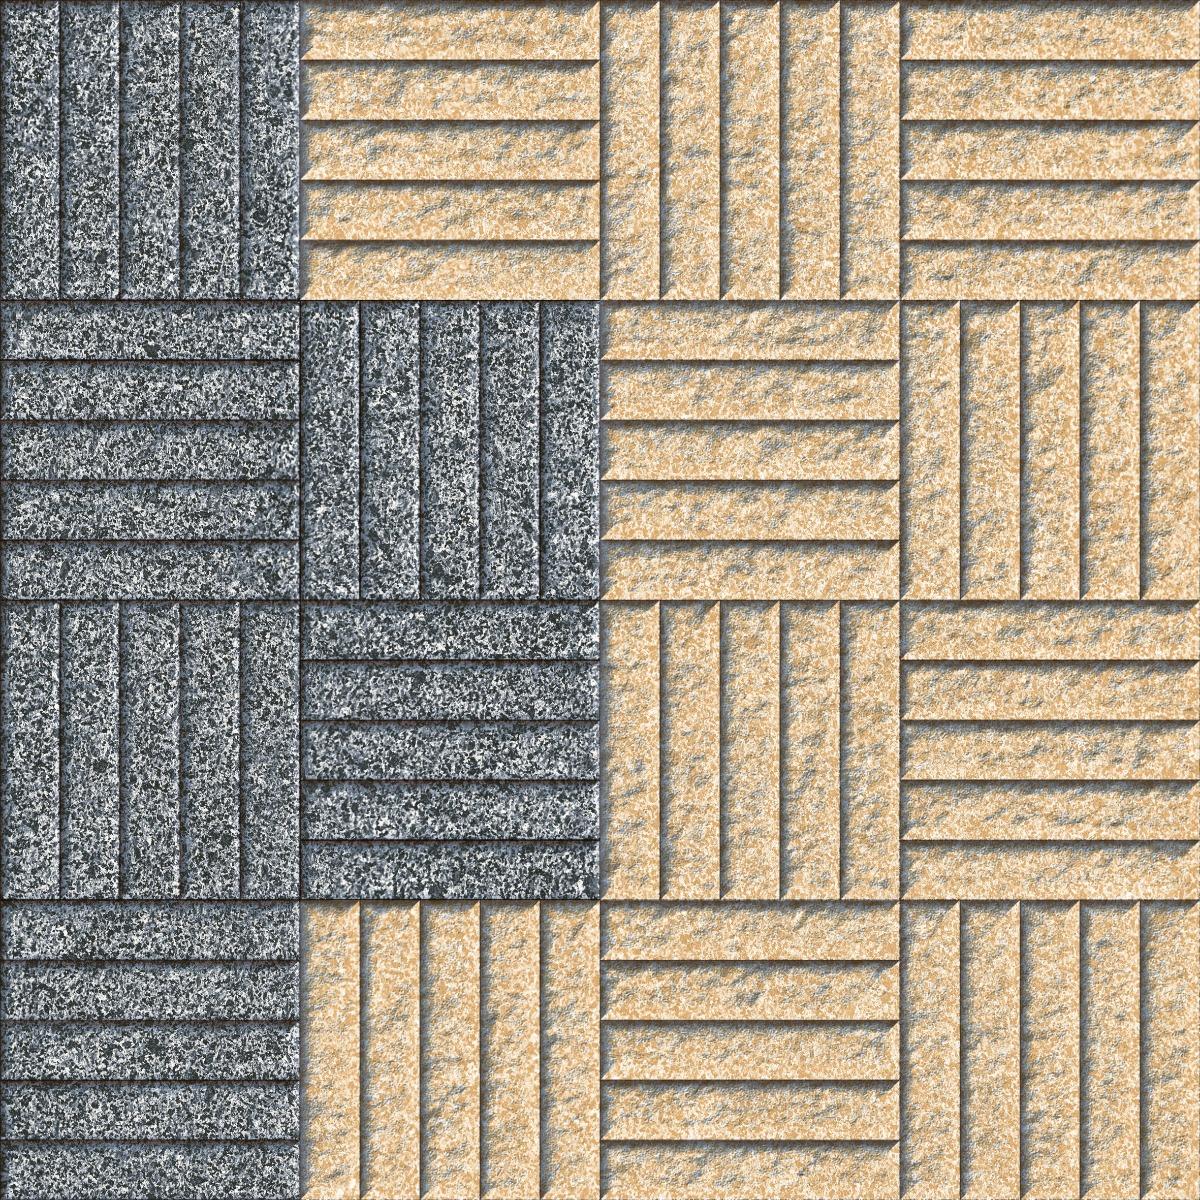 All Tiles for Commercial Tiles, Parking Tiles, Office Tiles, Pathway Tiles, Hospital Tiles, High Traffic Tiles, Bar/Restaurant, Outdoor Area, Porch/Parking